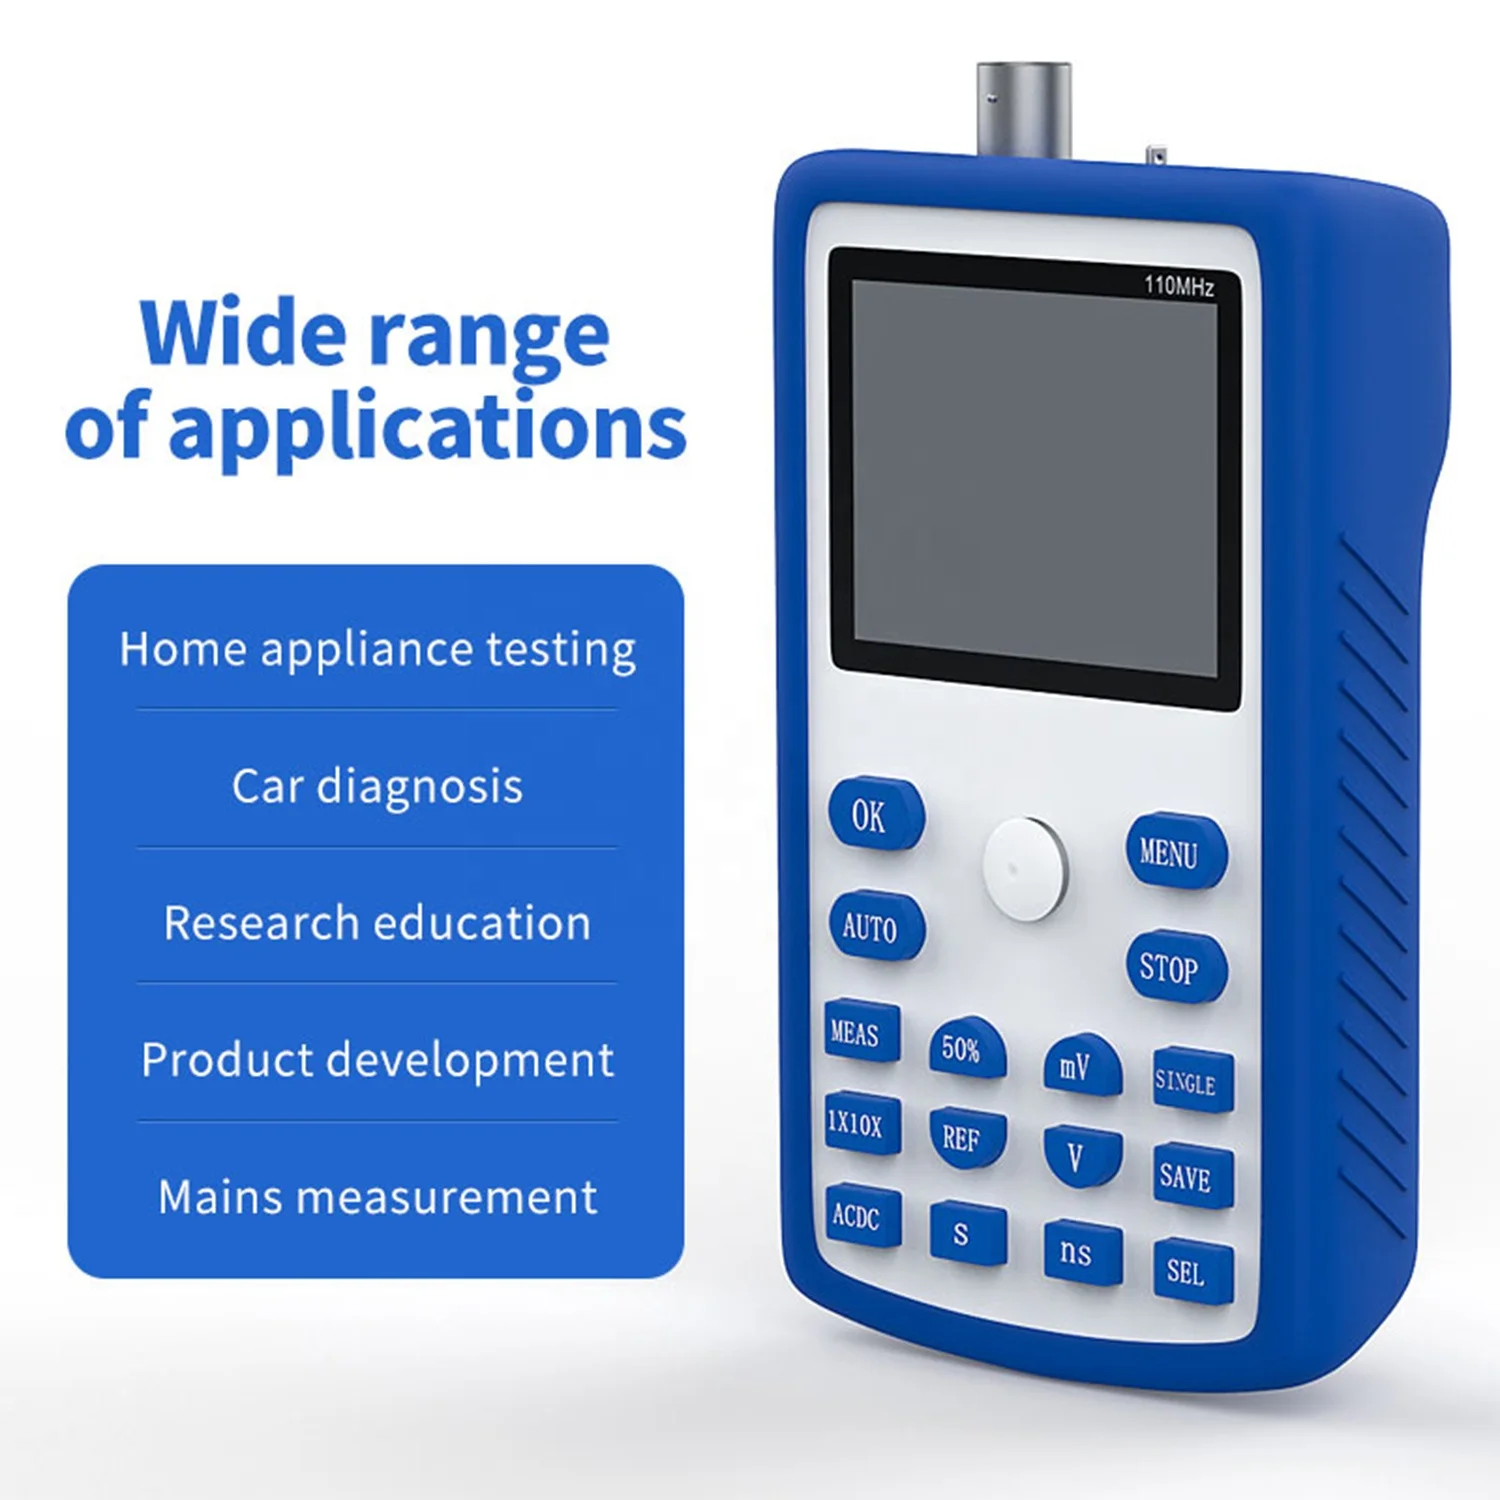 NEW Professional Portable Storage Oscilloscope Kit 110MHz Bandwidth 500MS/s Sampling Rate Digital Oscilloscope enlarge